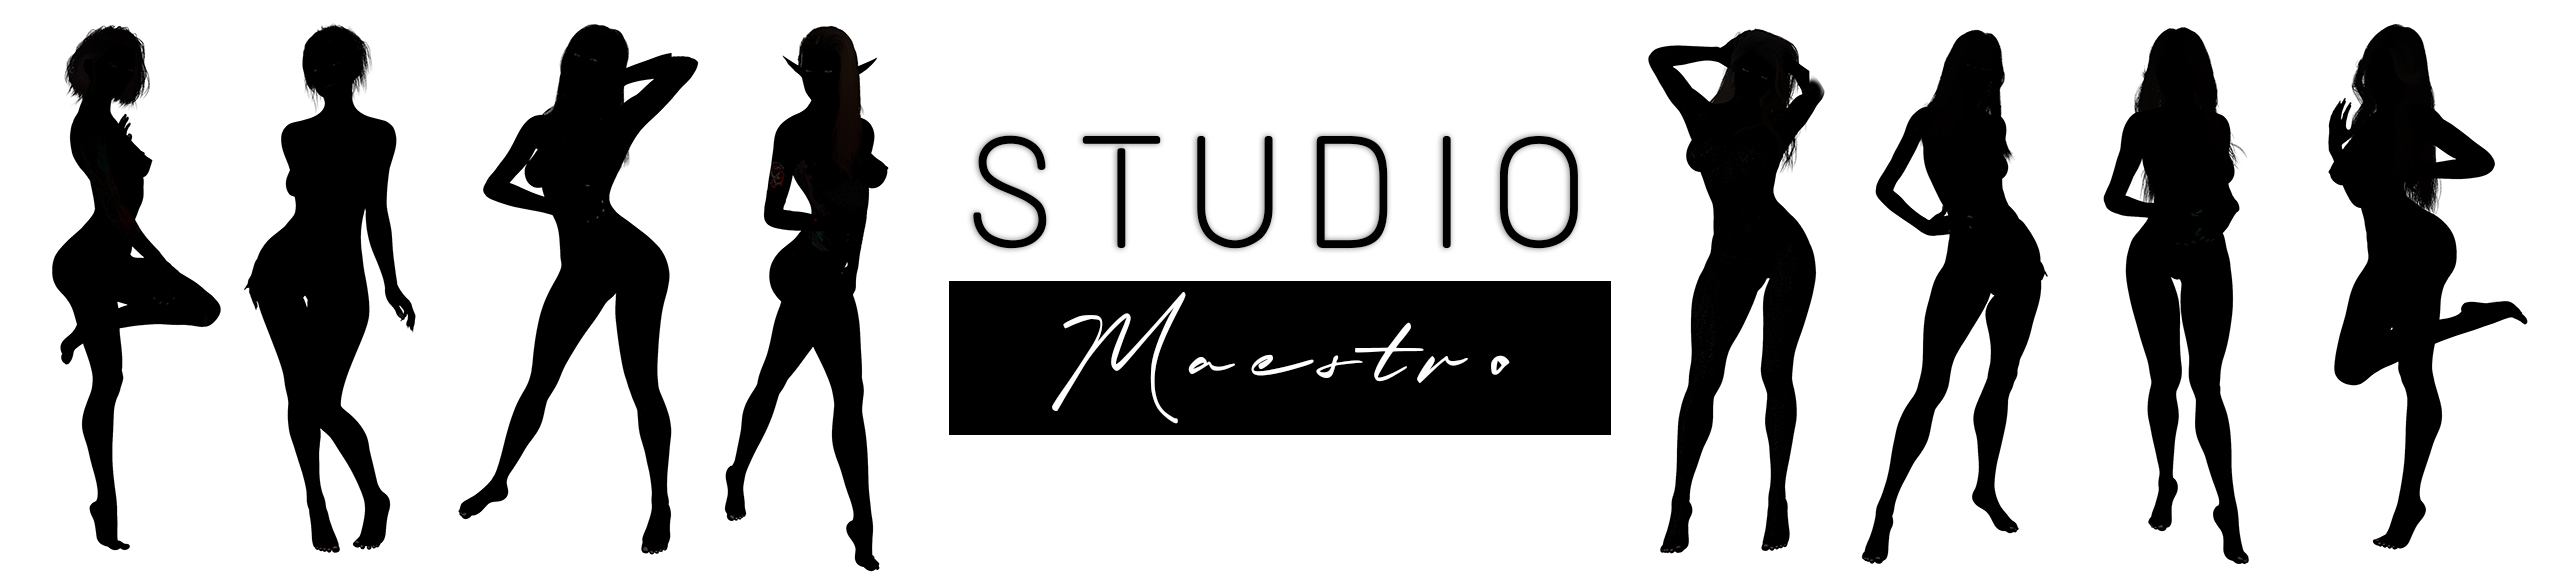 studiomaestro-title.jpg